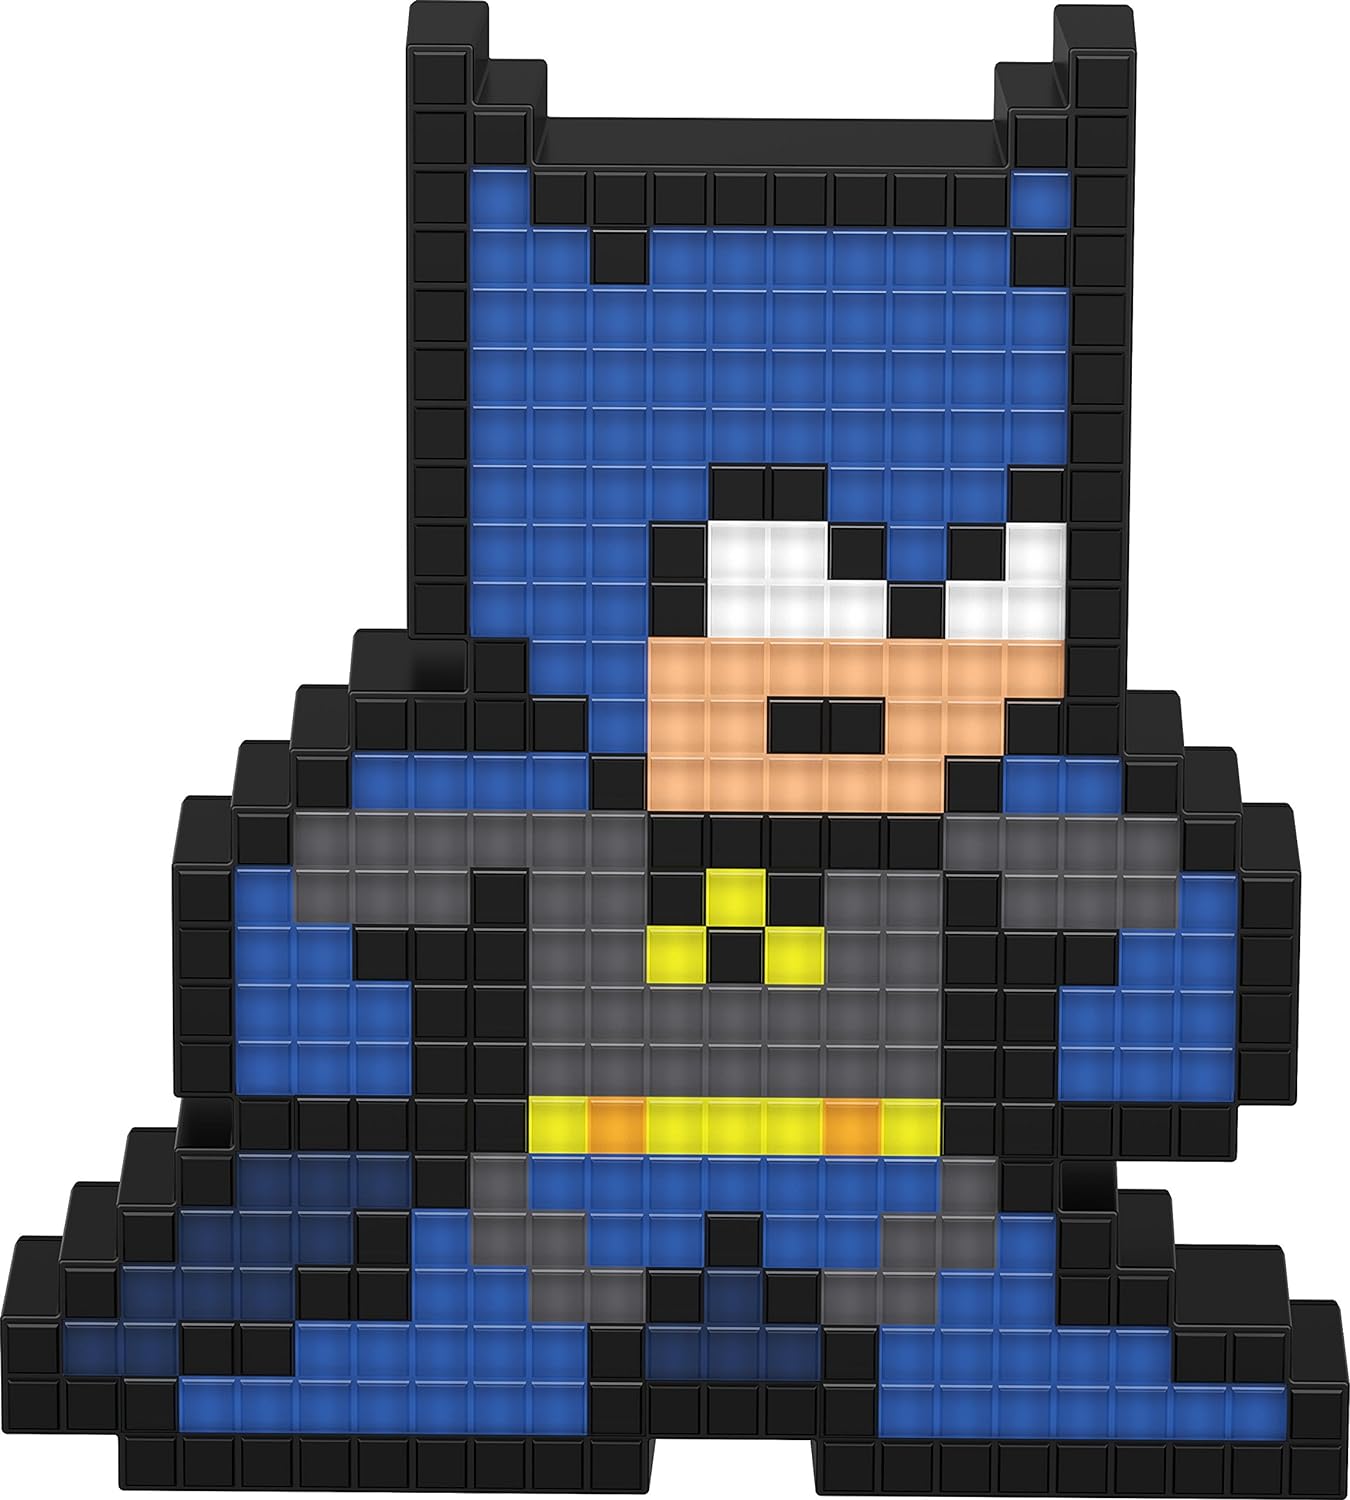 Pixel Pals DC Comics Batman Collectible Lighted Figure, 878-029-NA-BAT - King Gaming 